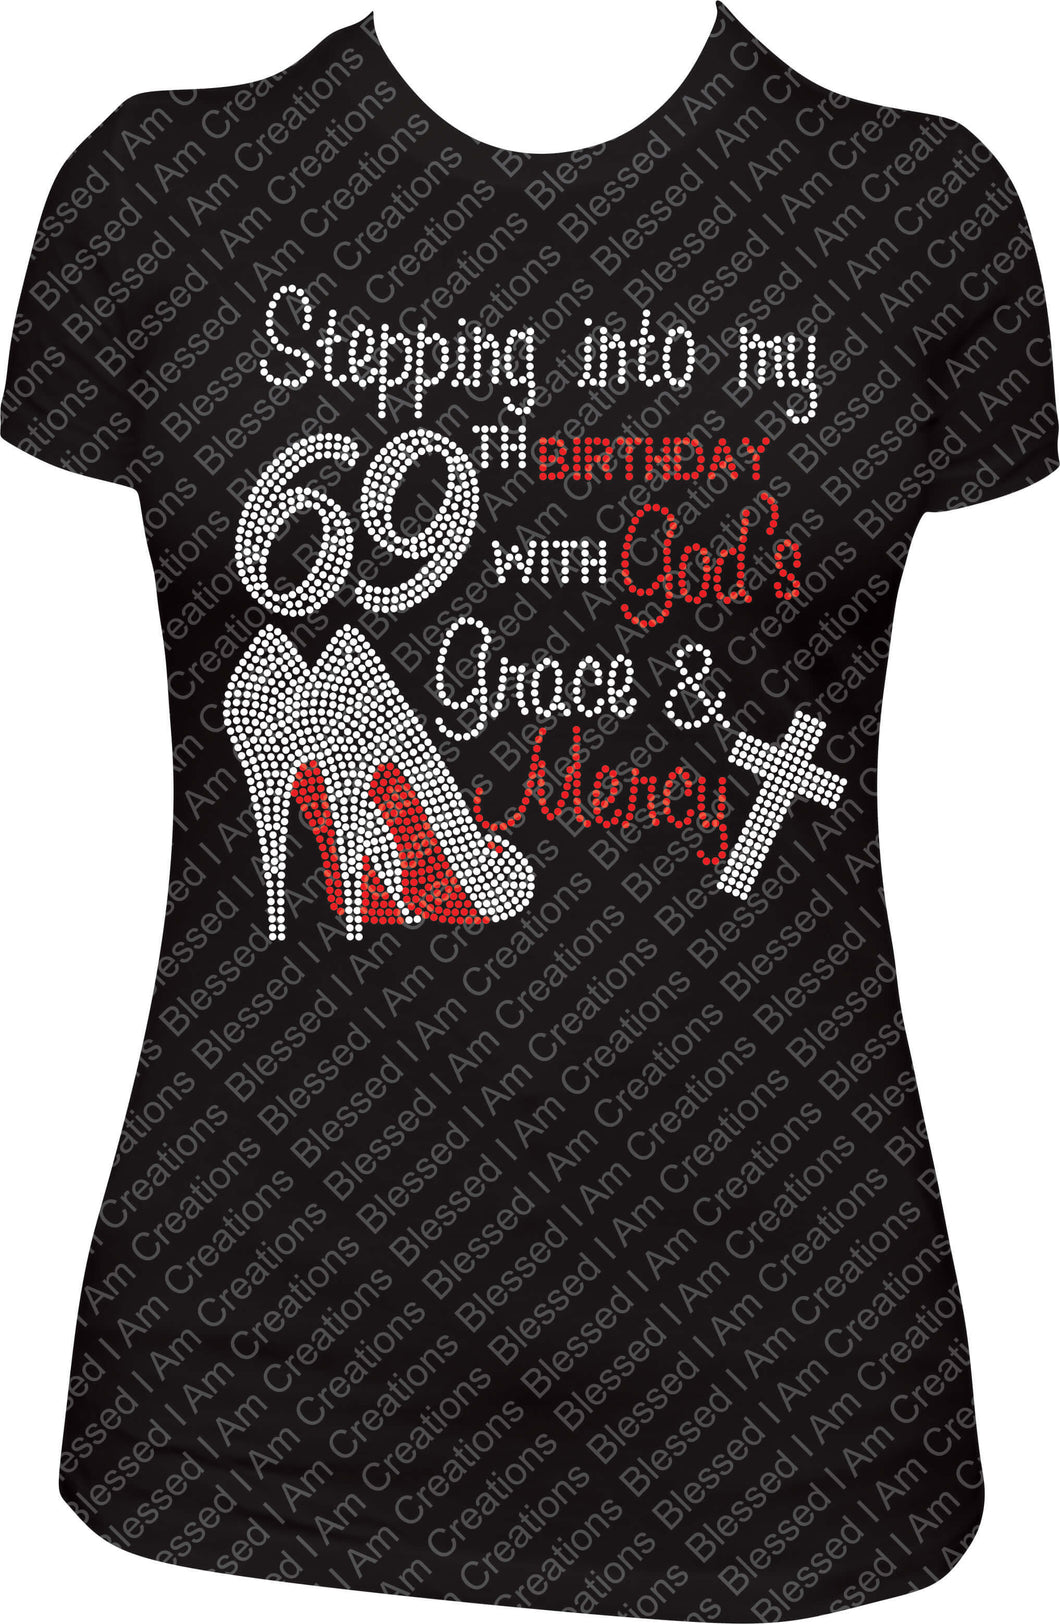 Stepping into my 69th Birthday with God's Grace and Mercy Rhinestone Birthday Shirt